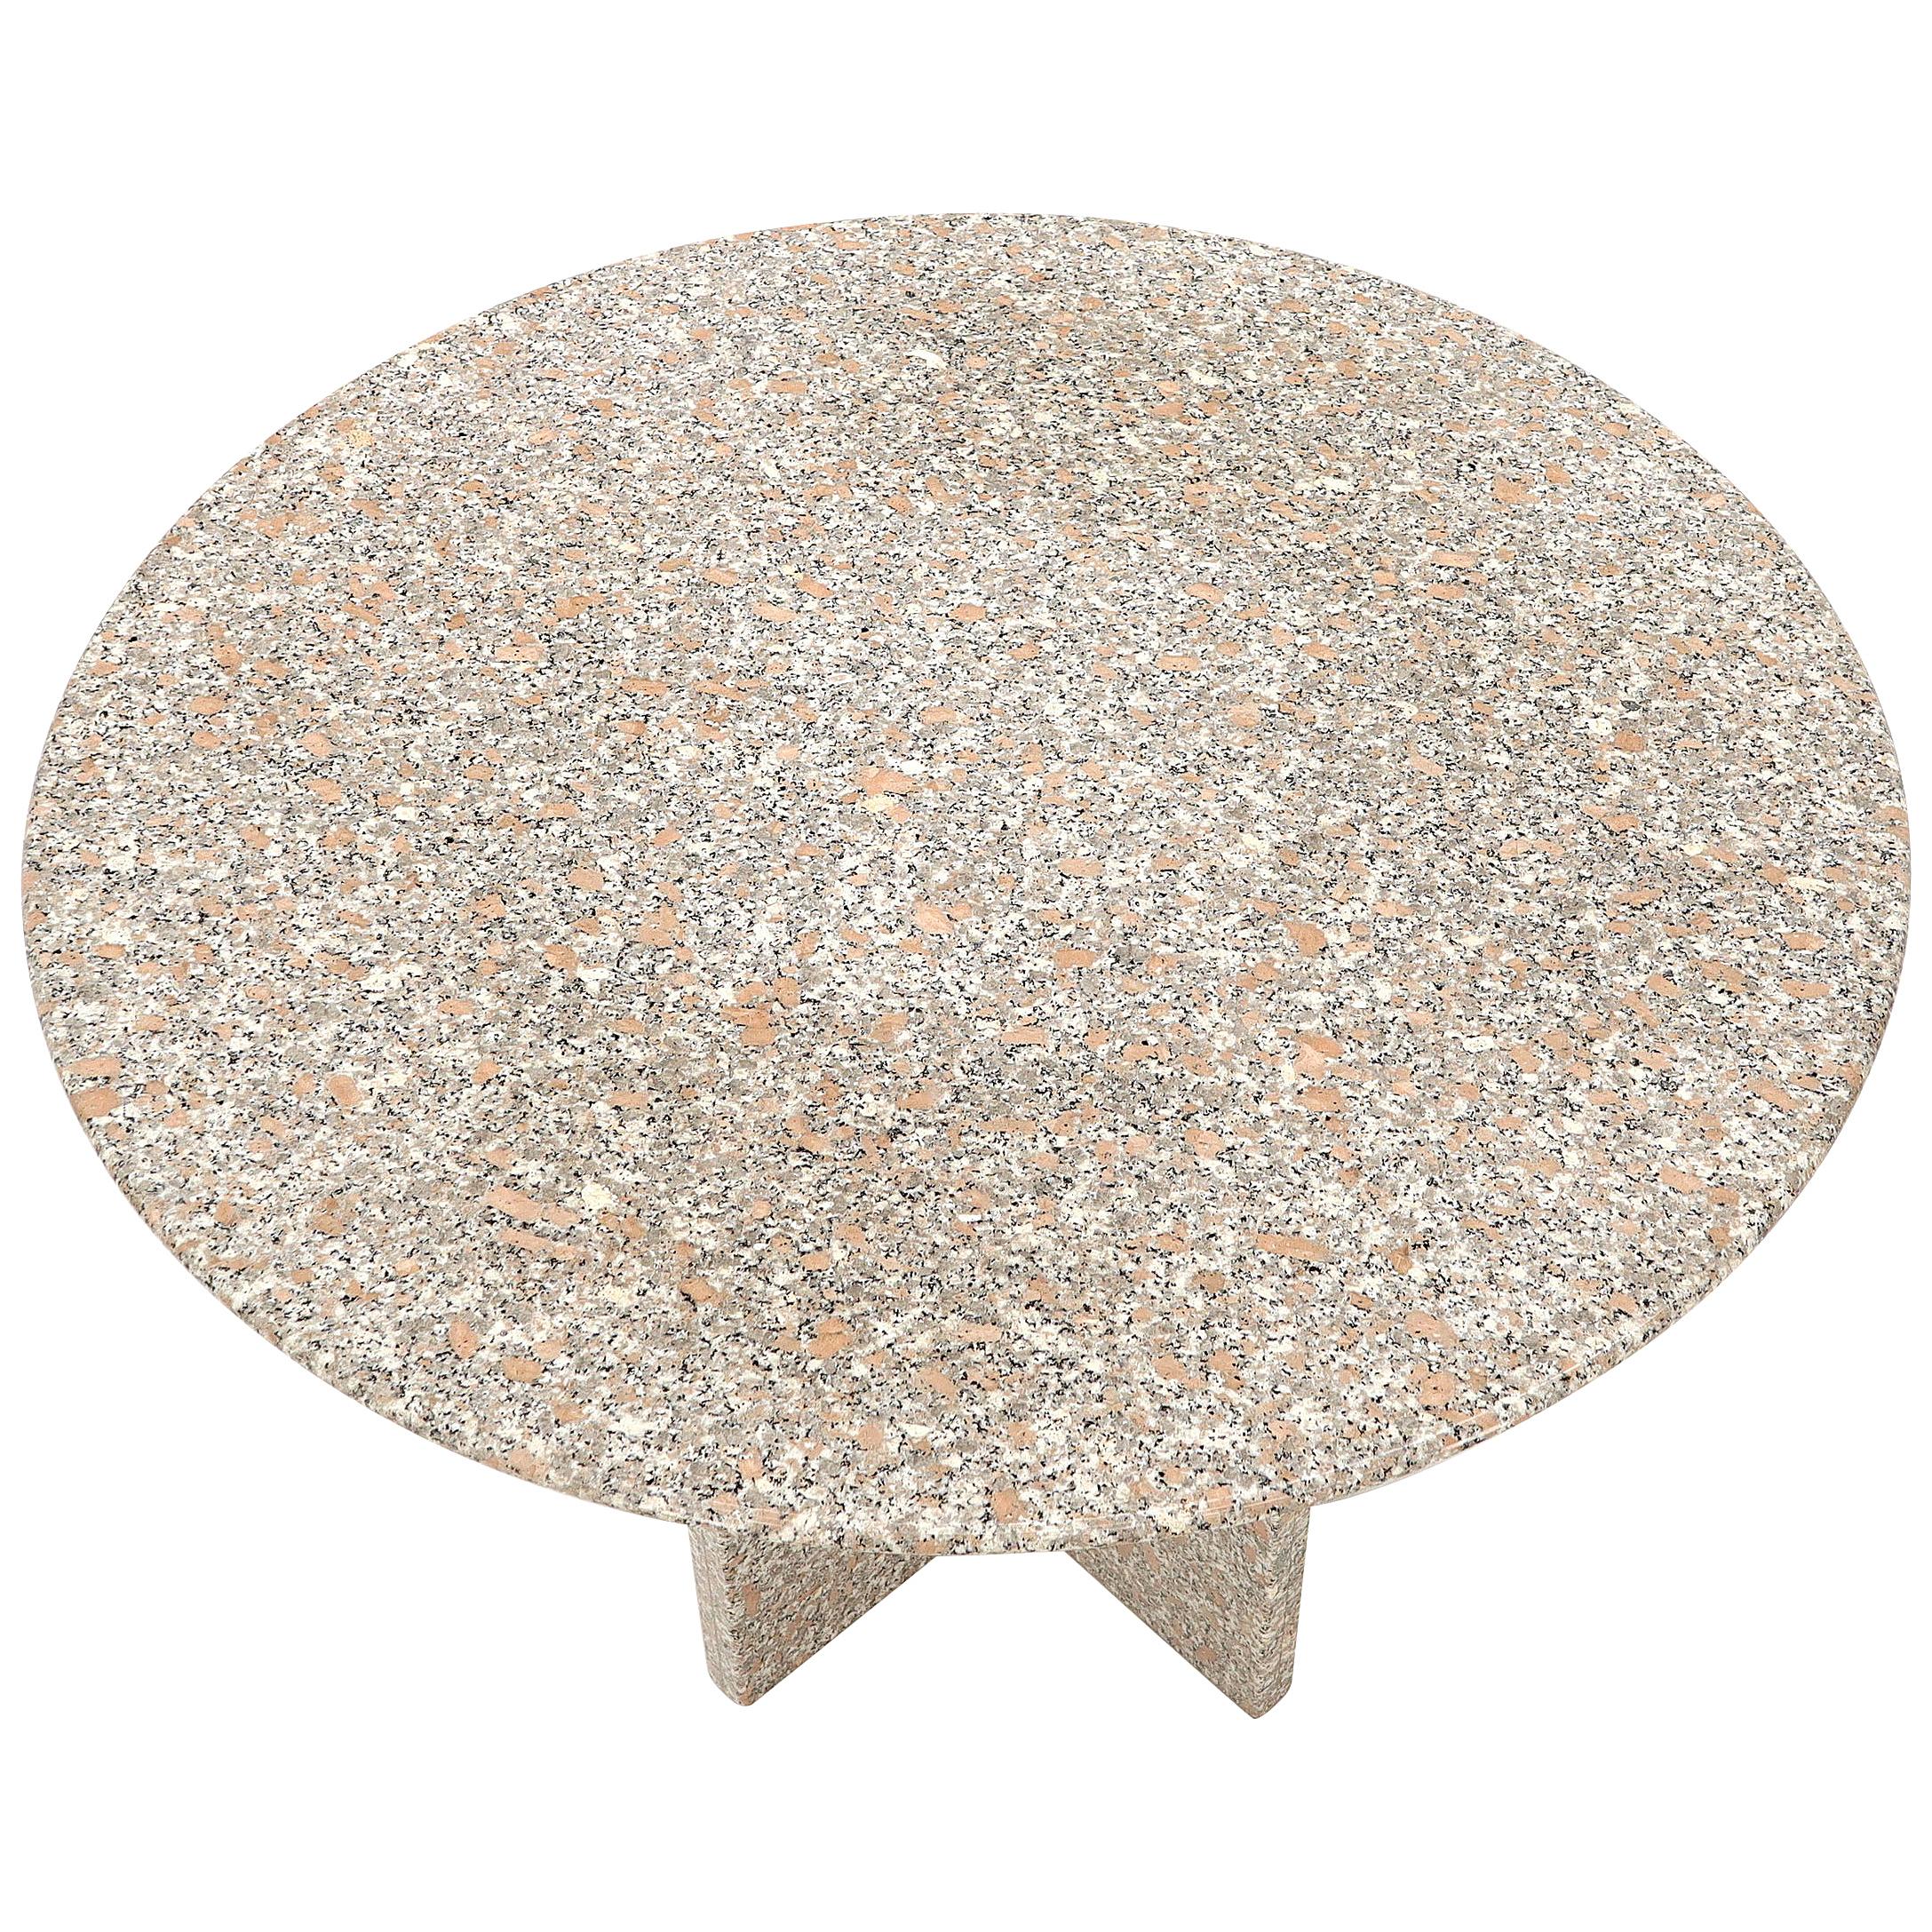 Round Granite Stone X Base Dining Dinette Center Table